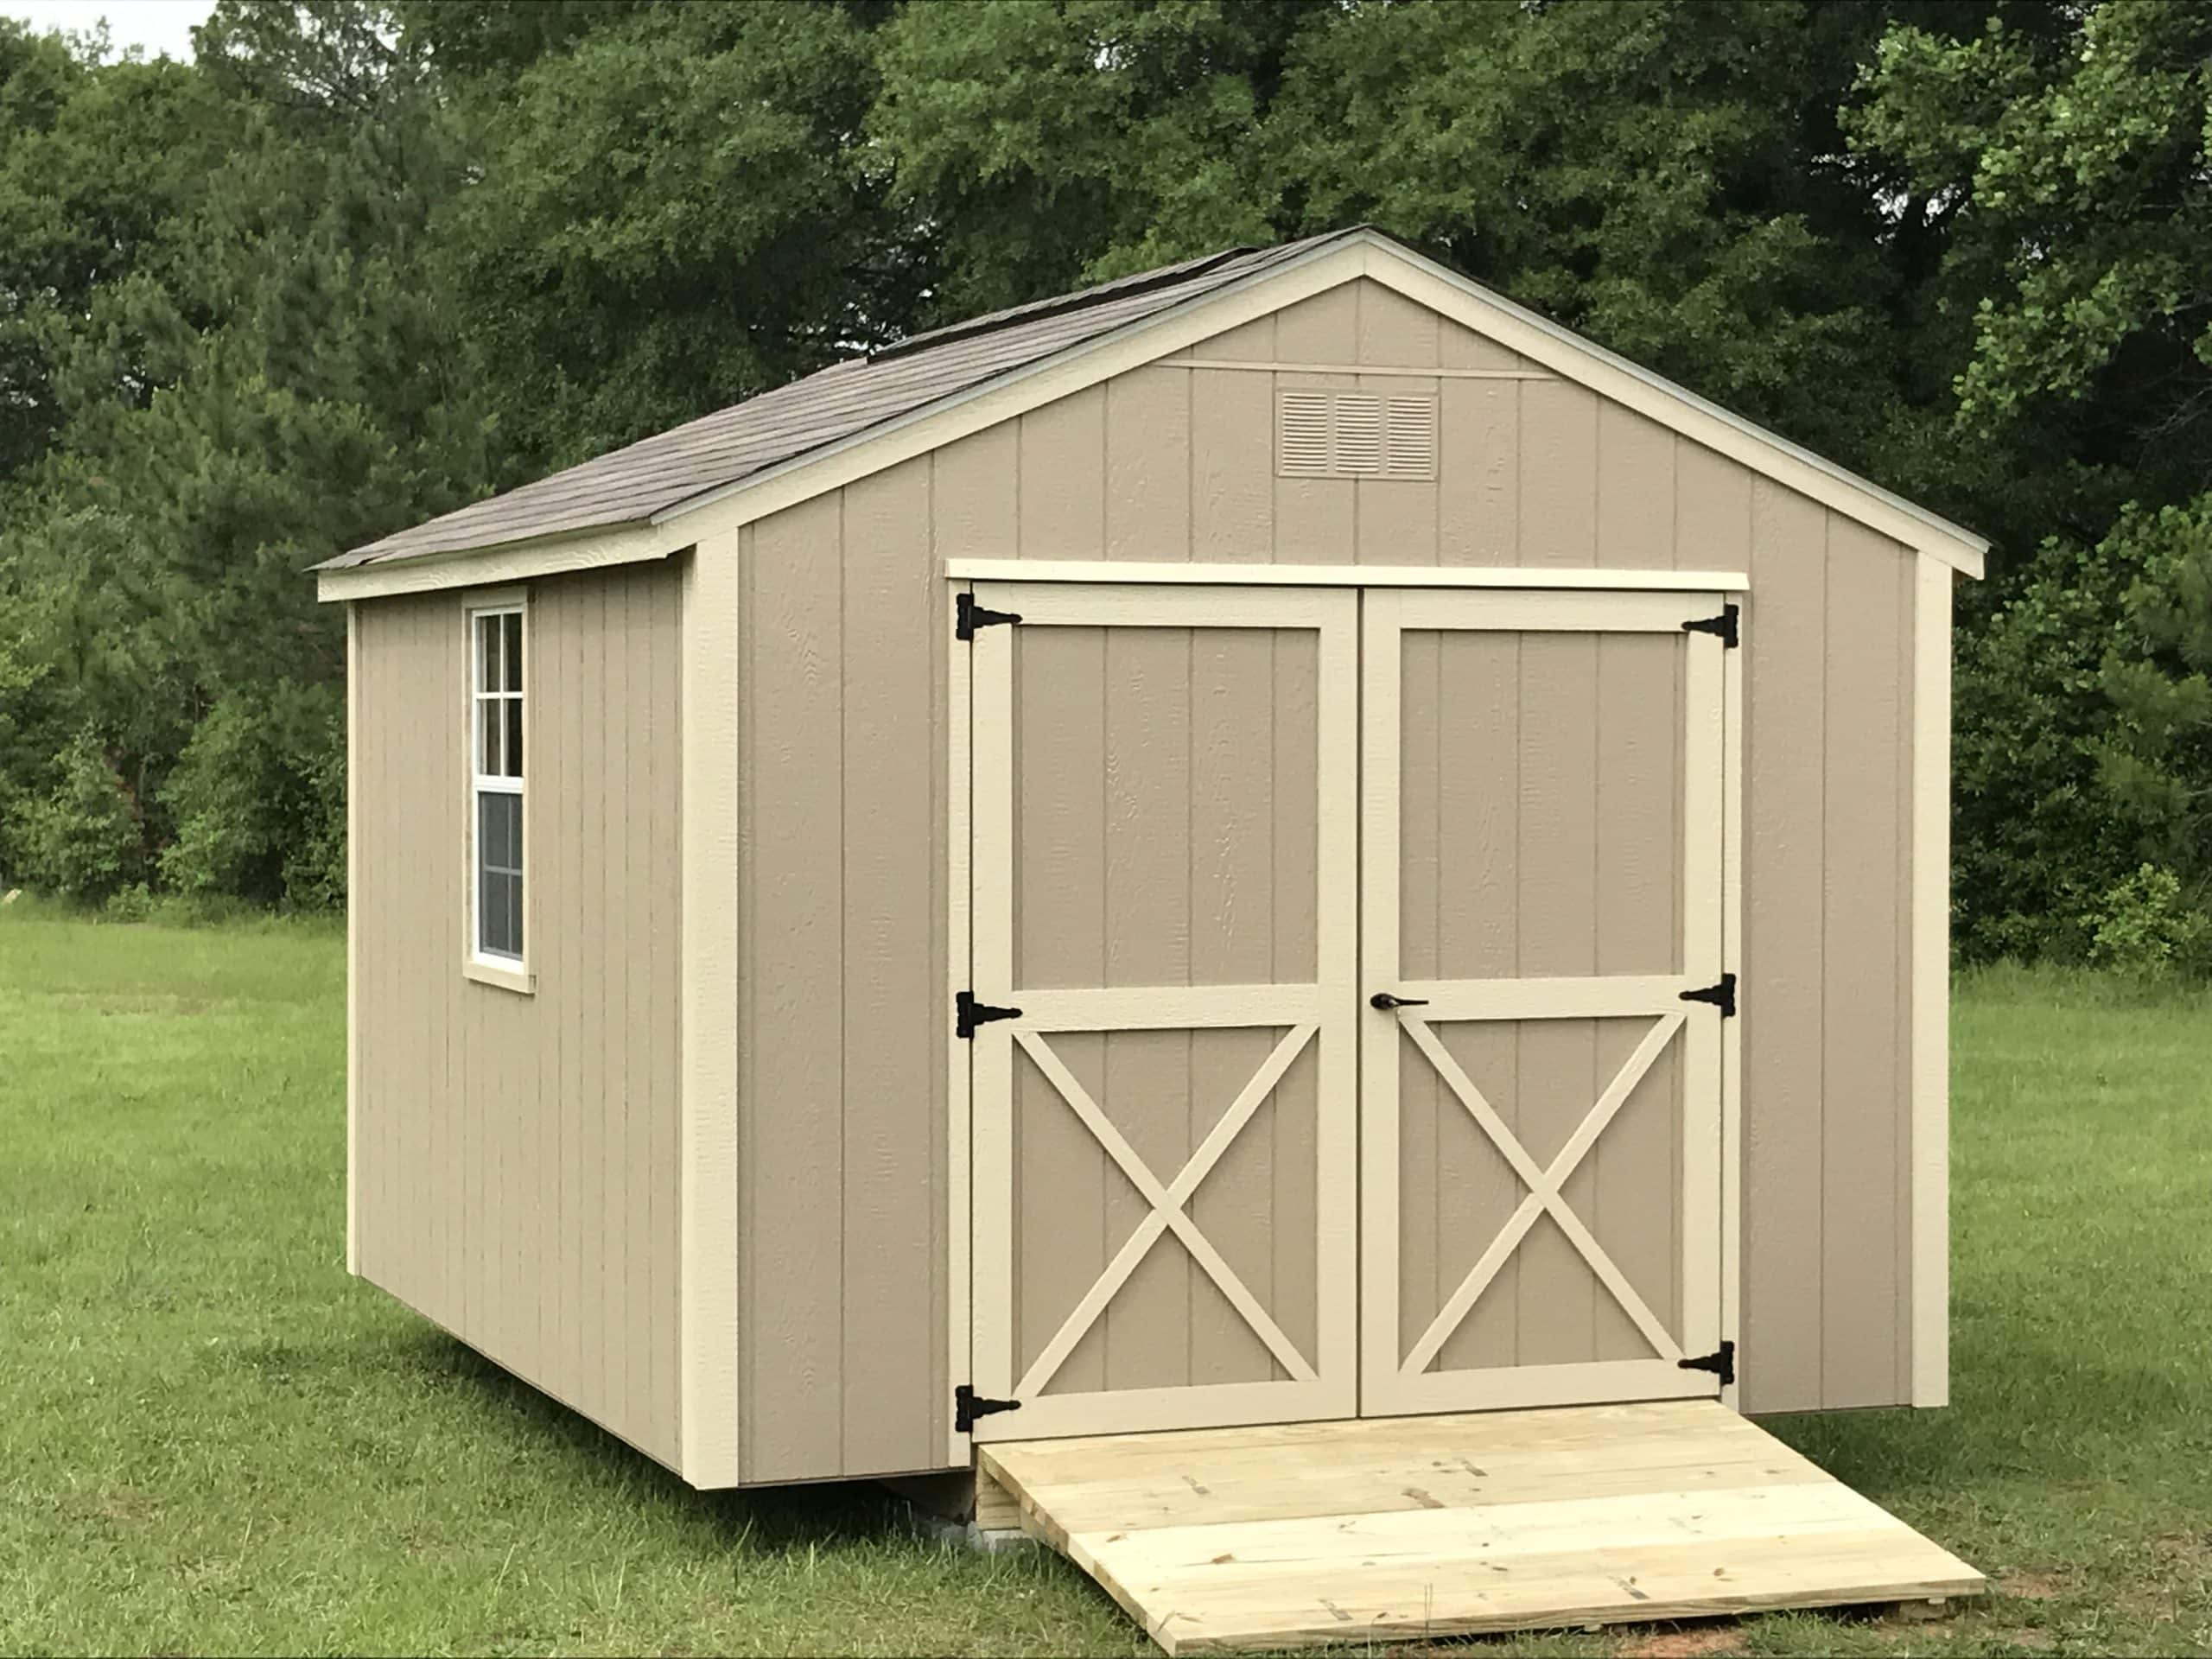 yard shed uses